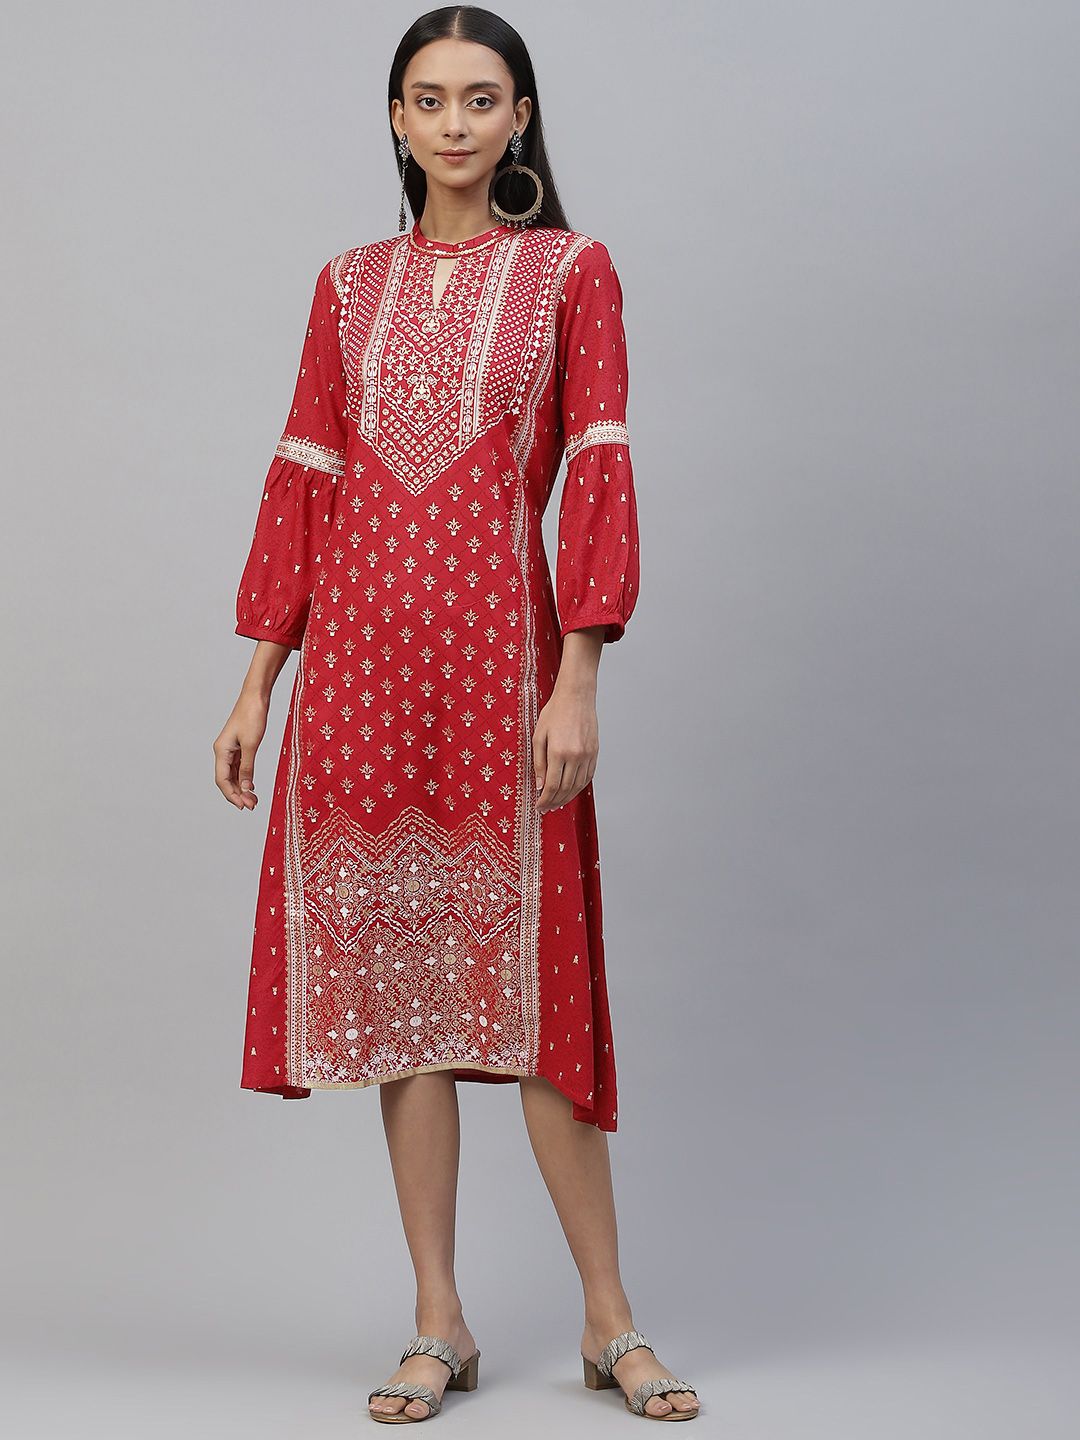 AURELIA Women Red & Golden Ethnic Motifs A-Line Midi Ethnic Dress Price in India